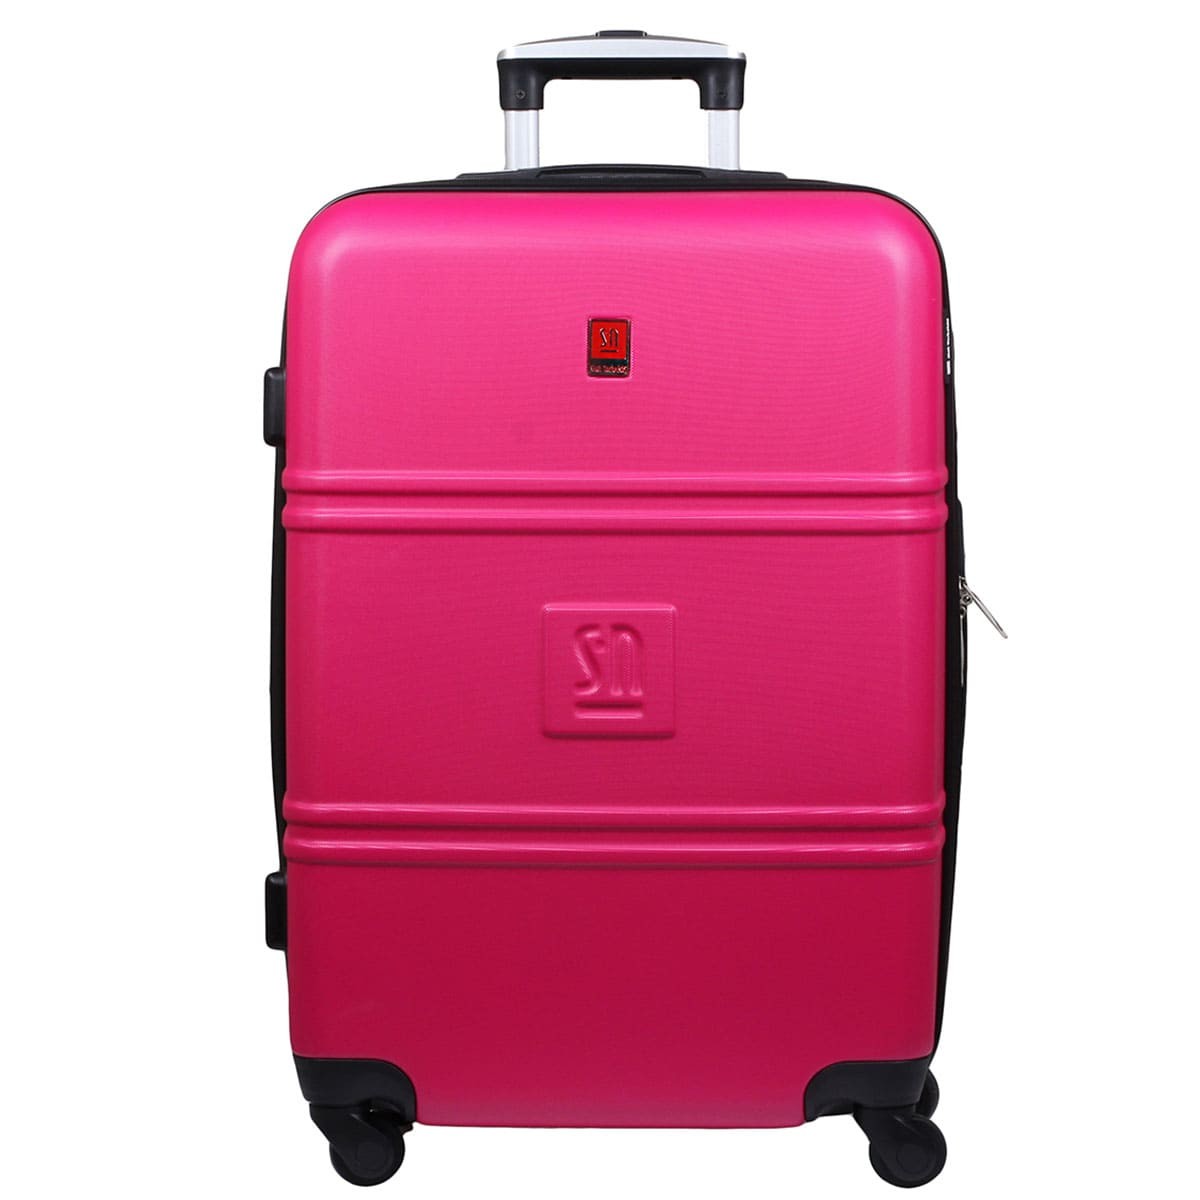 rozowa-walizka-podrozna-duza-na-kolkach-Art-Class-04-0411S-09.jpg